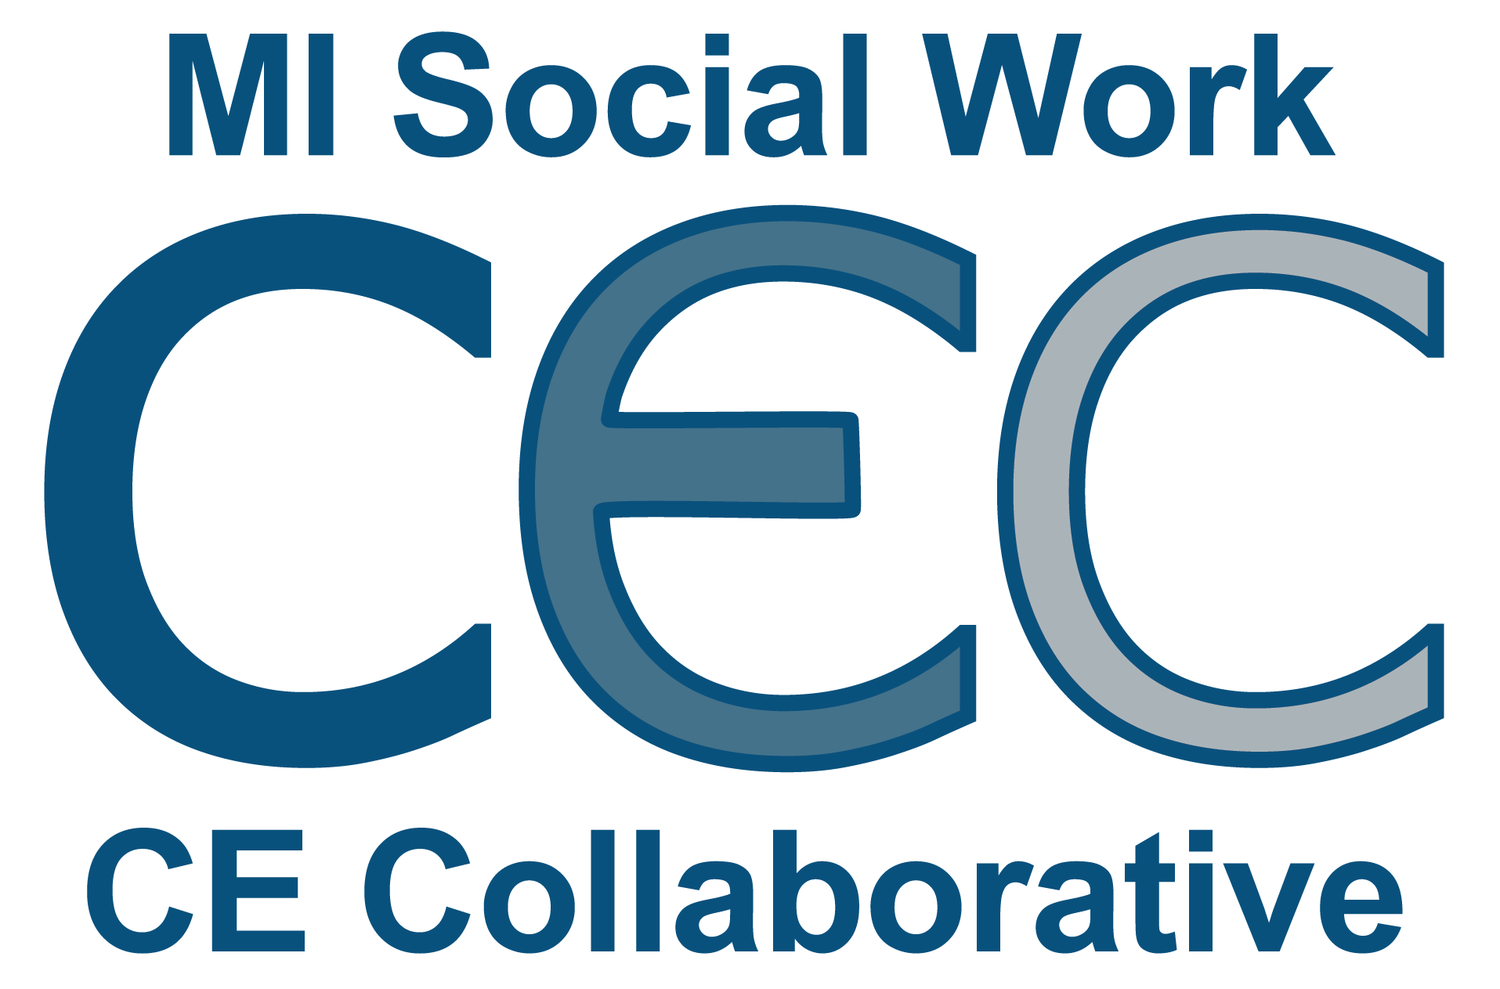 crisis intervention model social work